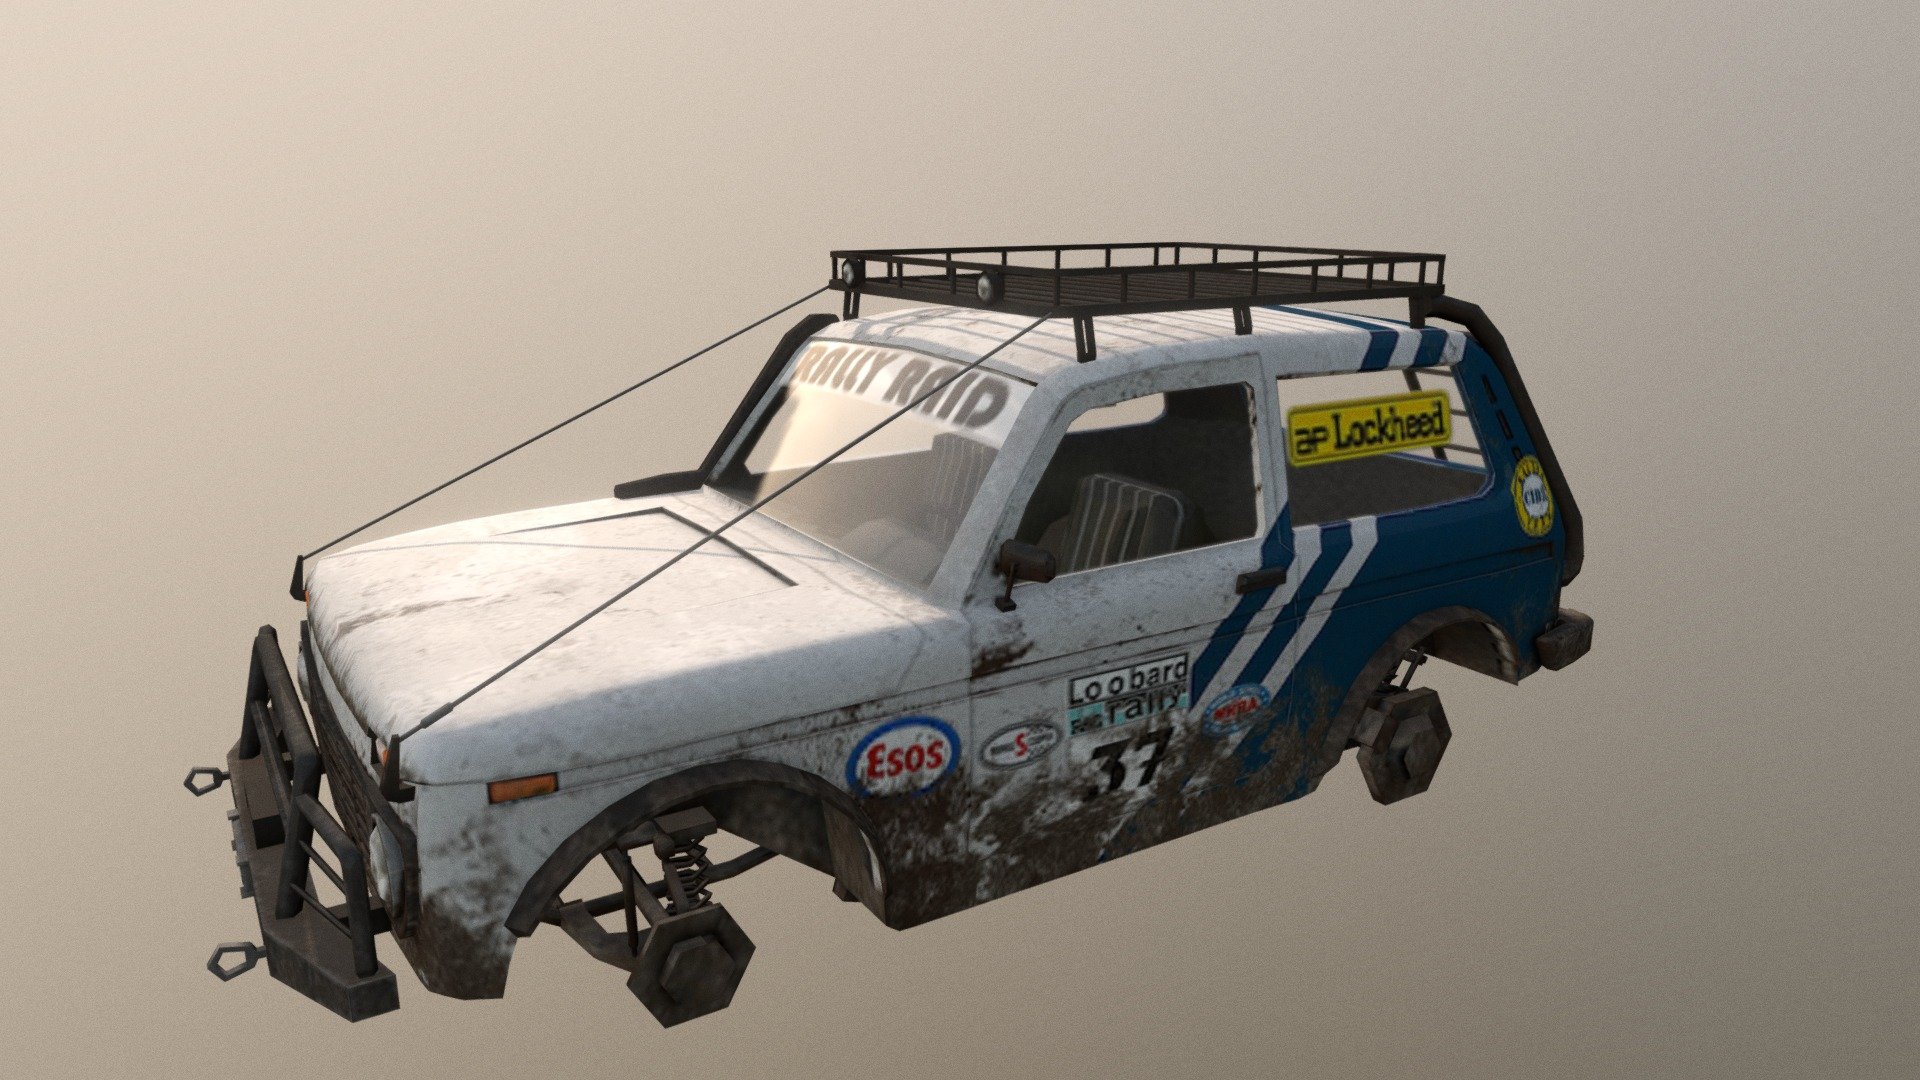 Niva 2121 Rally - Sketchfab embed 3D viewer. 